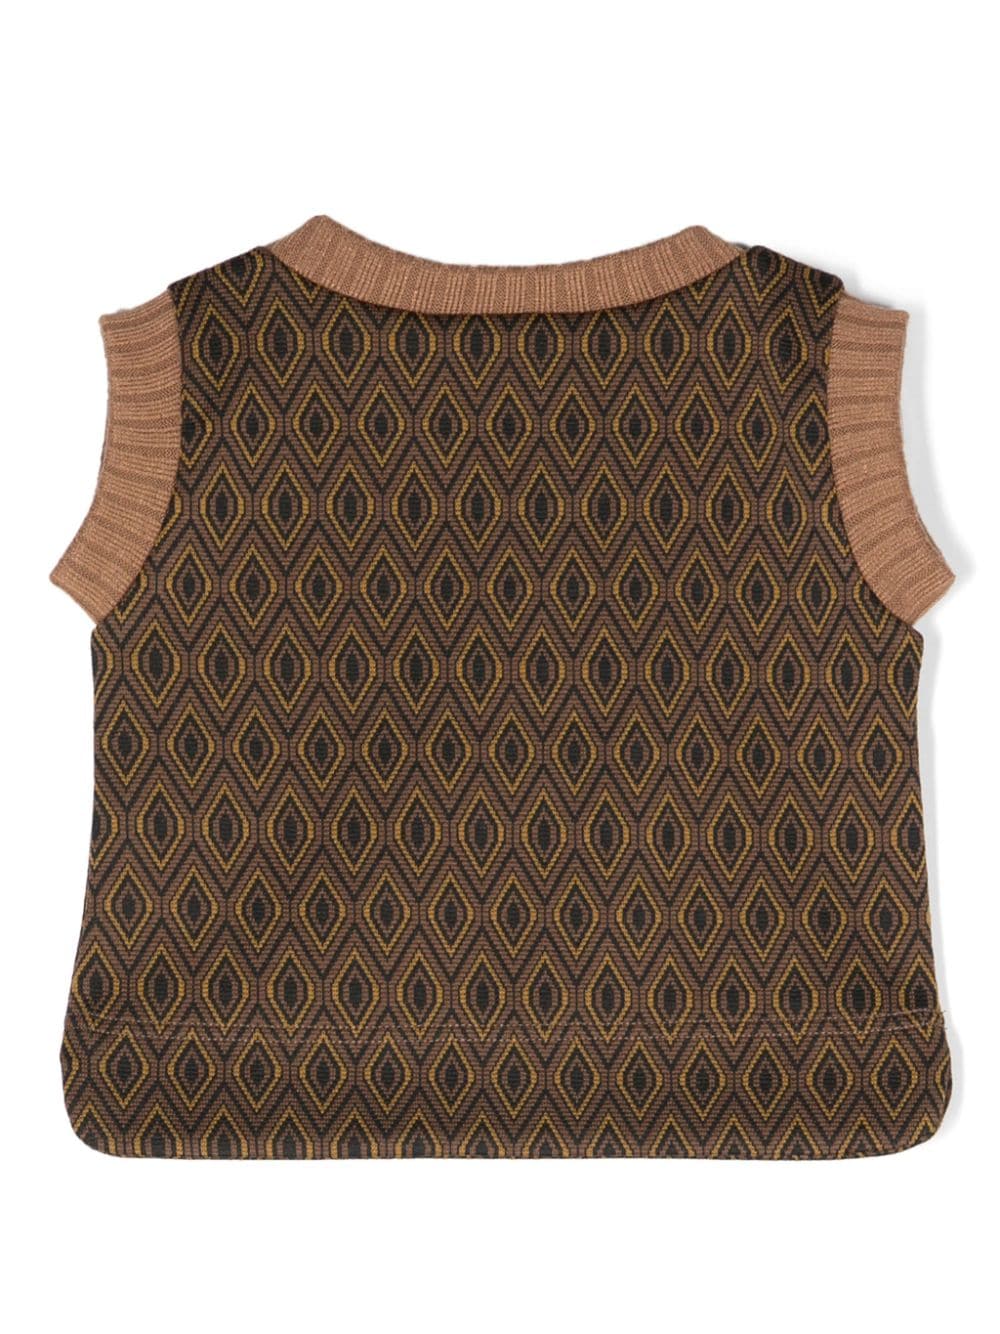 Vest with geometric pattern